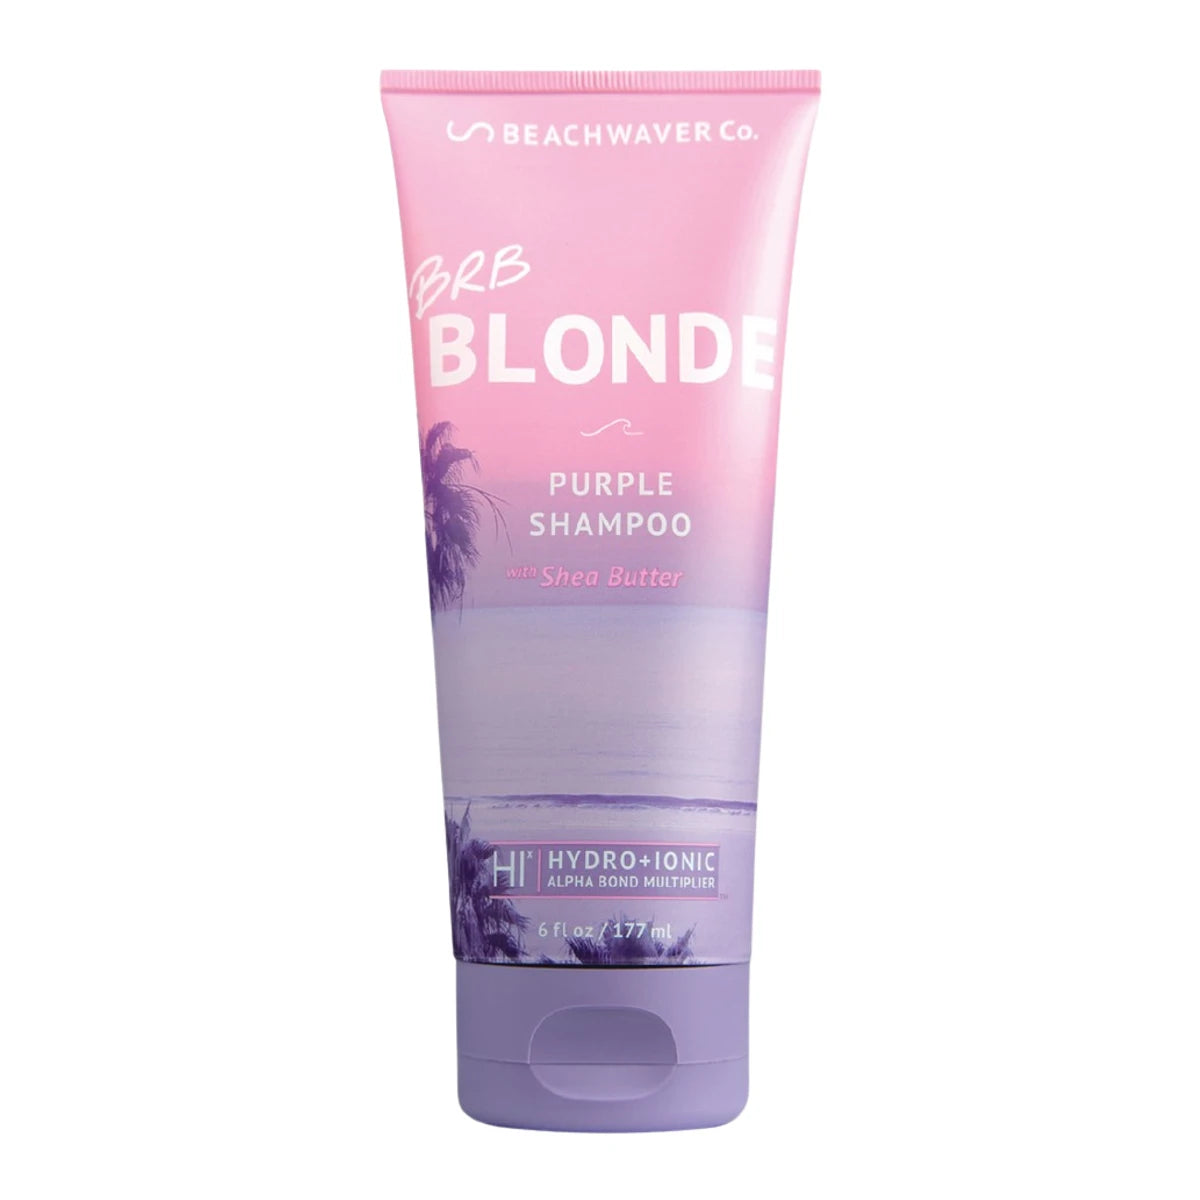 Beachwaver Co. BRB Blonde Purple Shampoo 6 oz